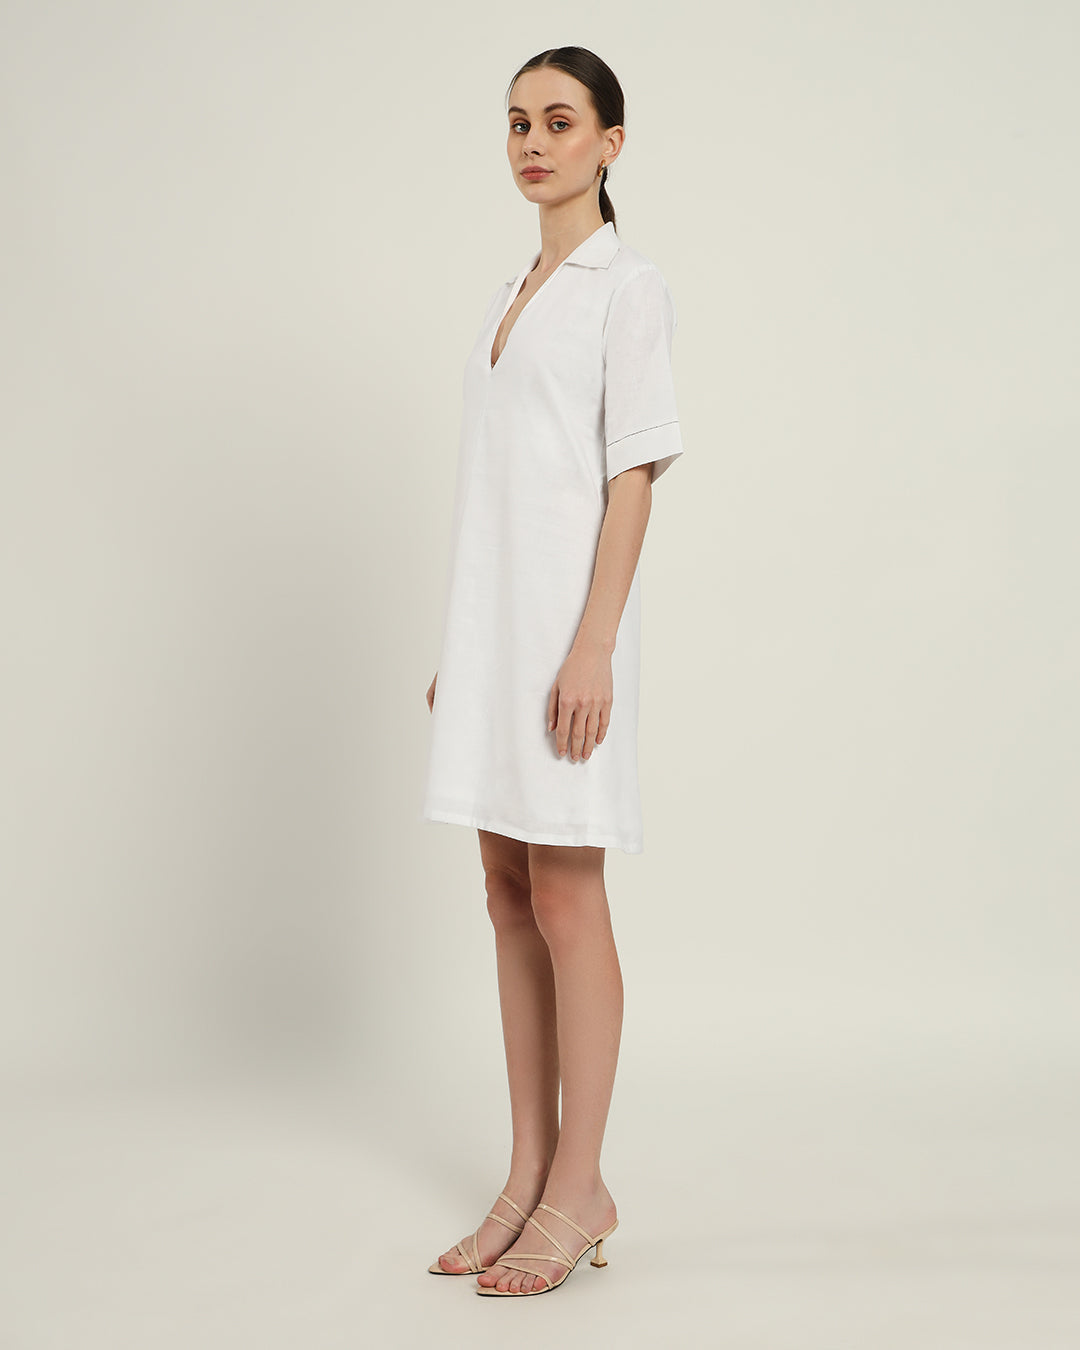 The Ermont Daisy White Linen Dress